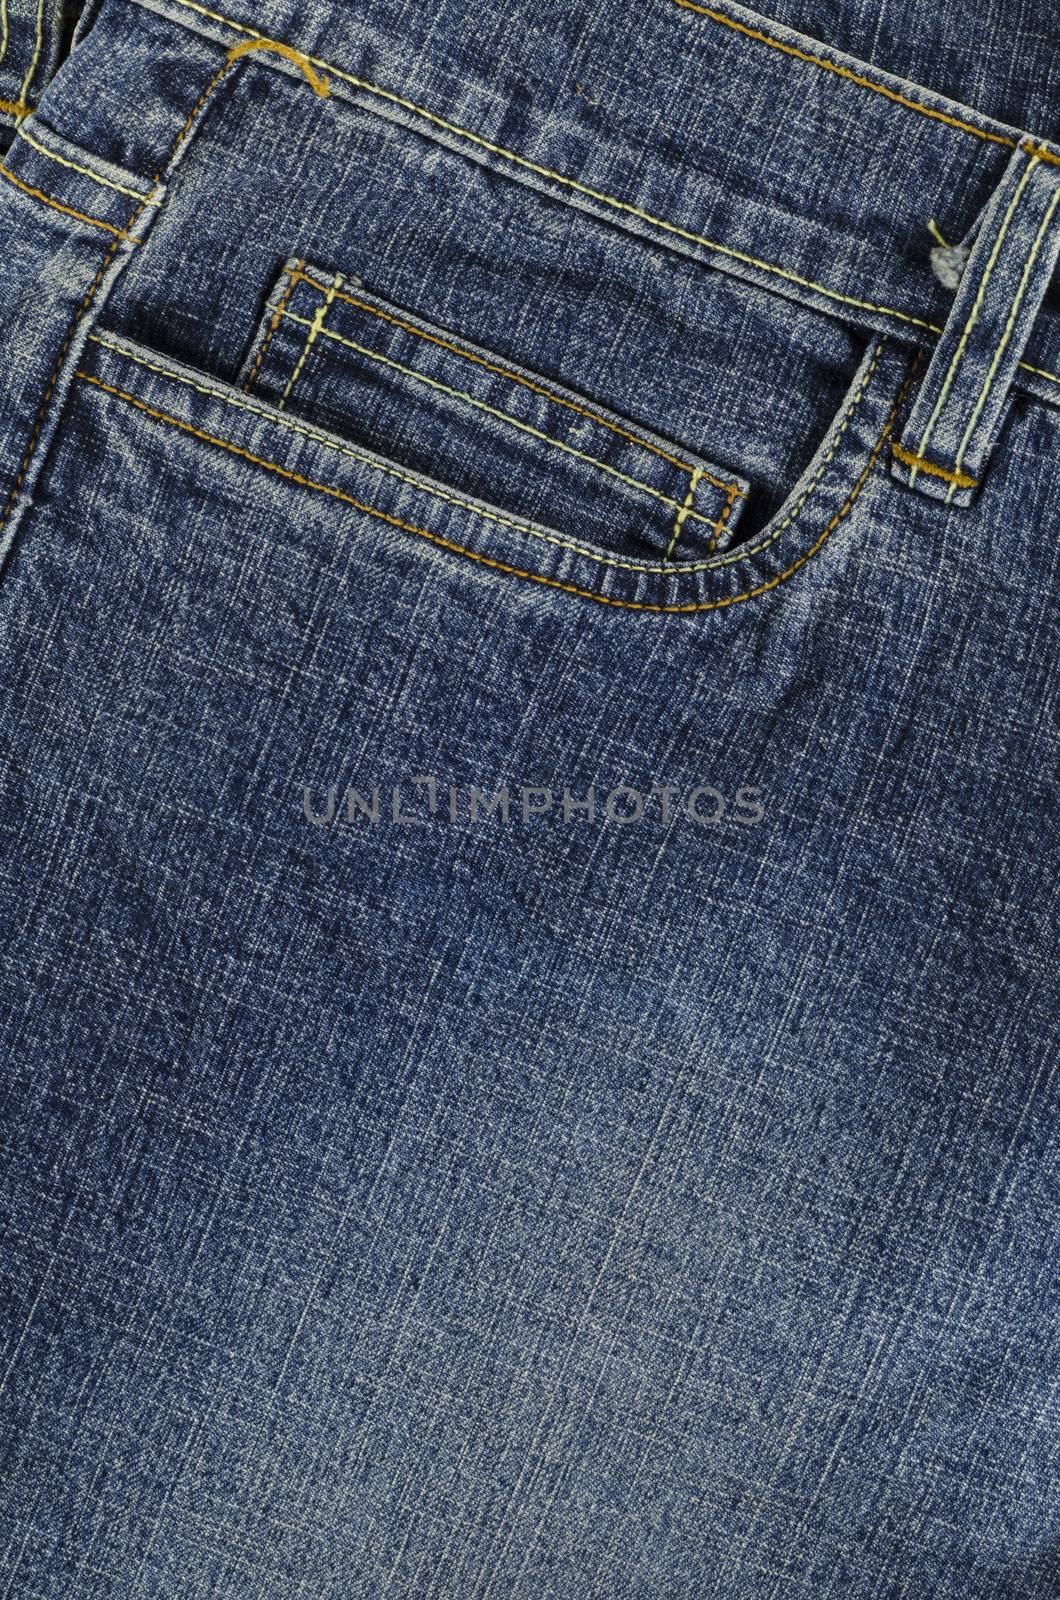 blue jeans pocket by ammza12